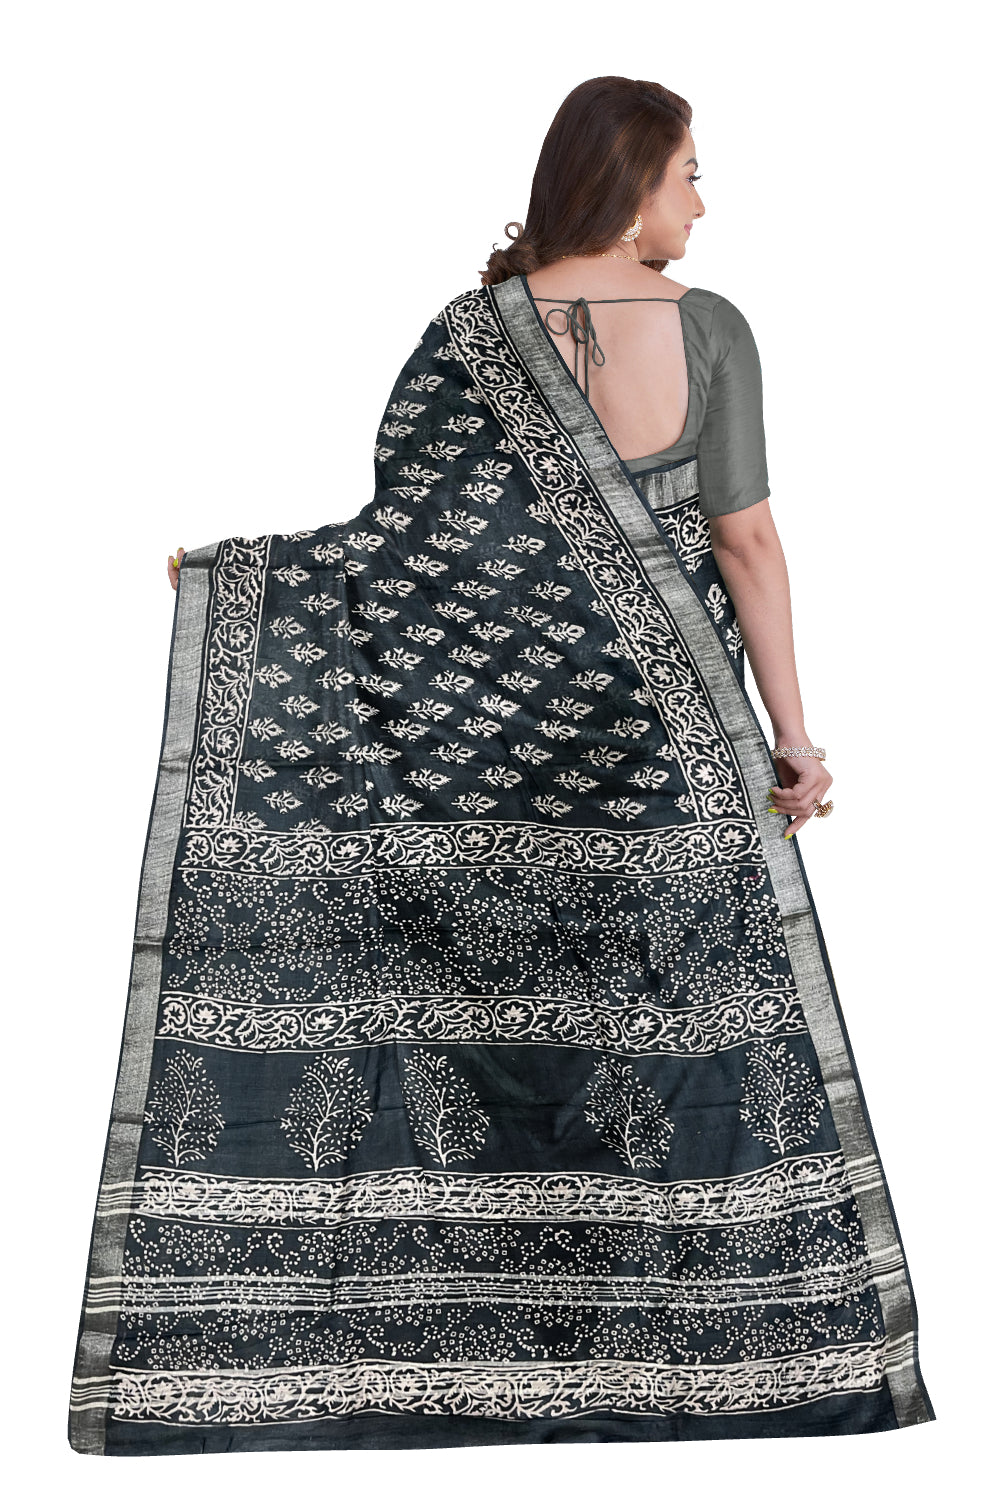 Southloom Linen Grey Designer Saree with Floral Prints